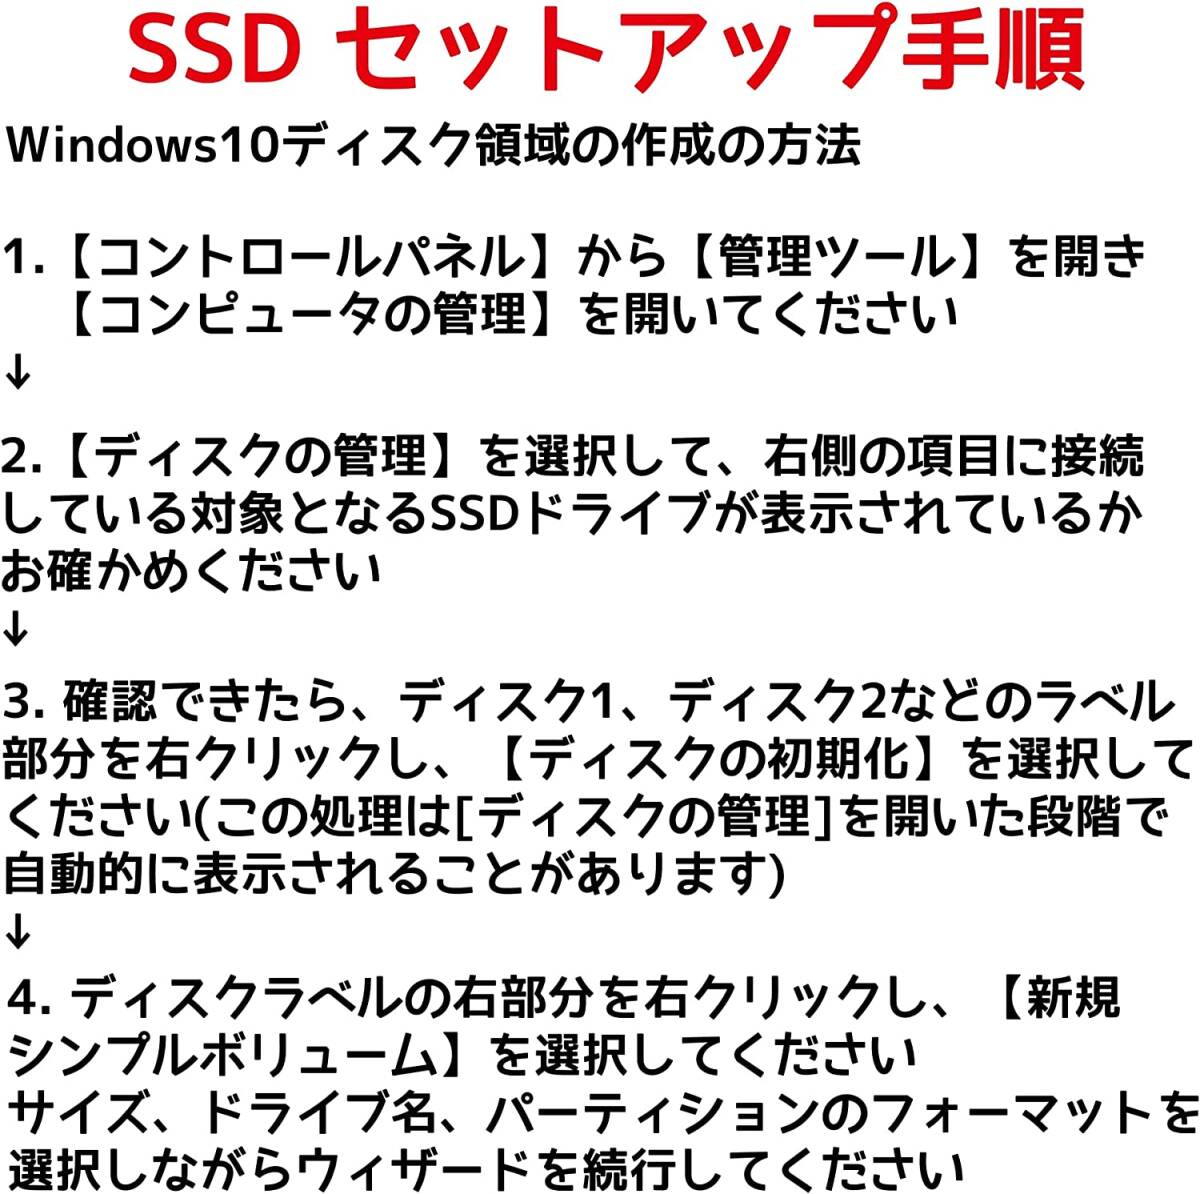 【SUNEAST】 SE90025ST-04TB 内蔵SSD 2.5インチ 7mm SATA3 6Gb/s 3D NAND PS4動作確認済 内蔵型 ssd 4tb 国内3年保証 新品！_画像6